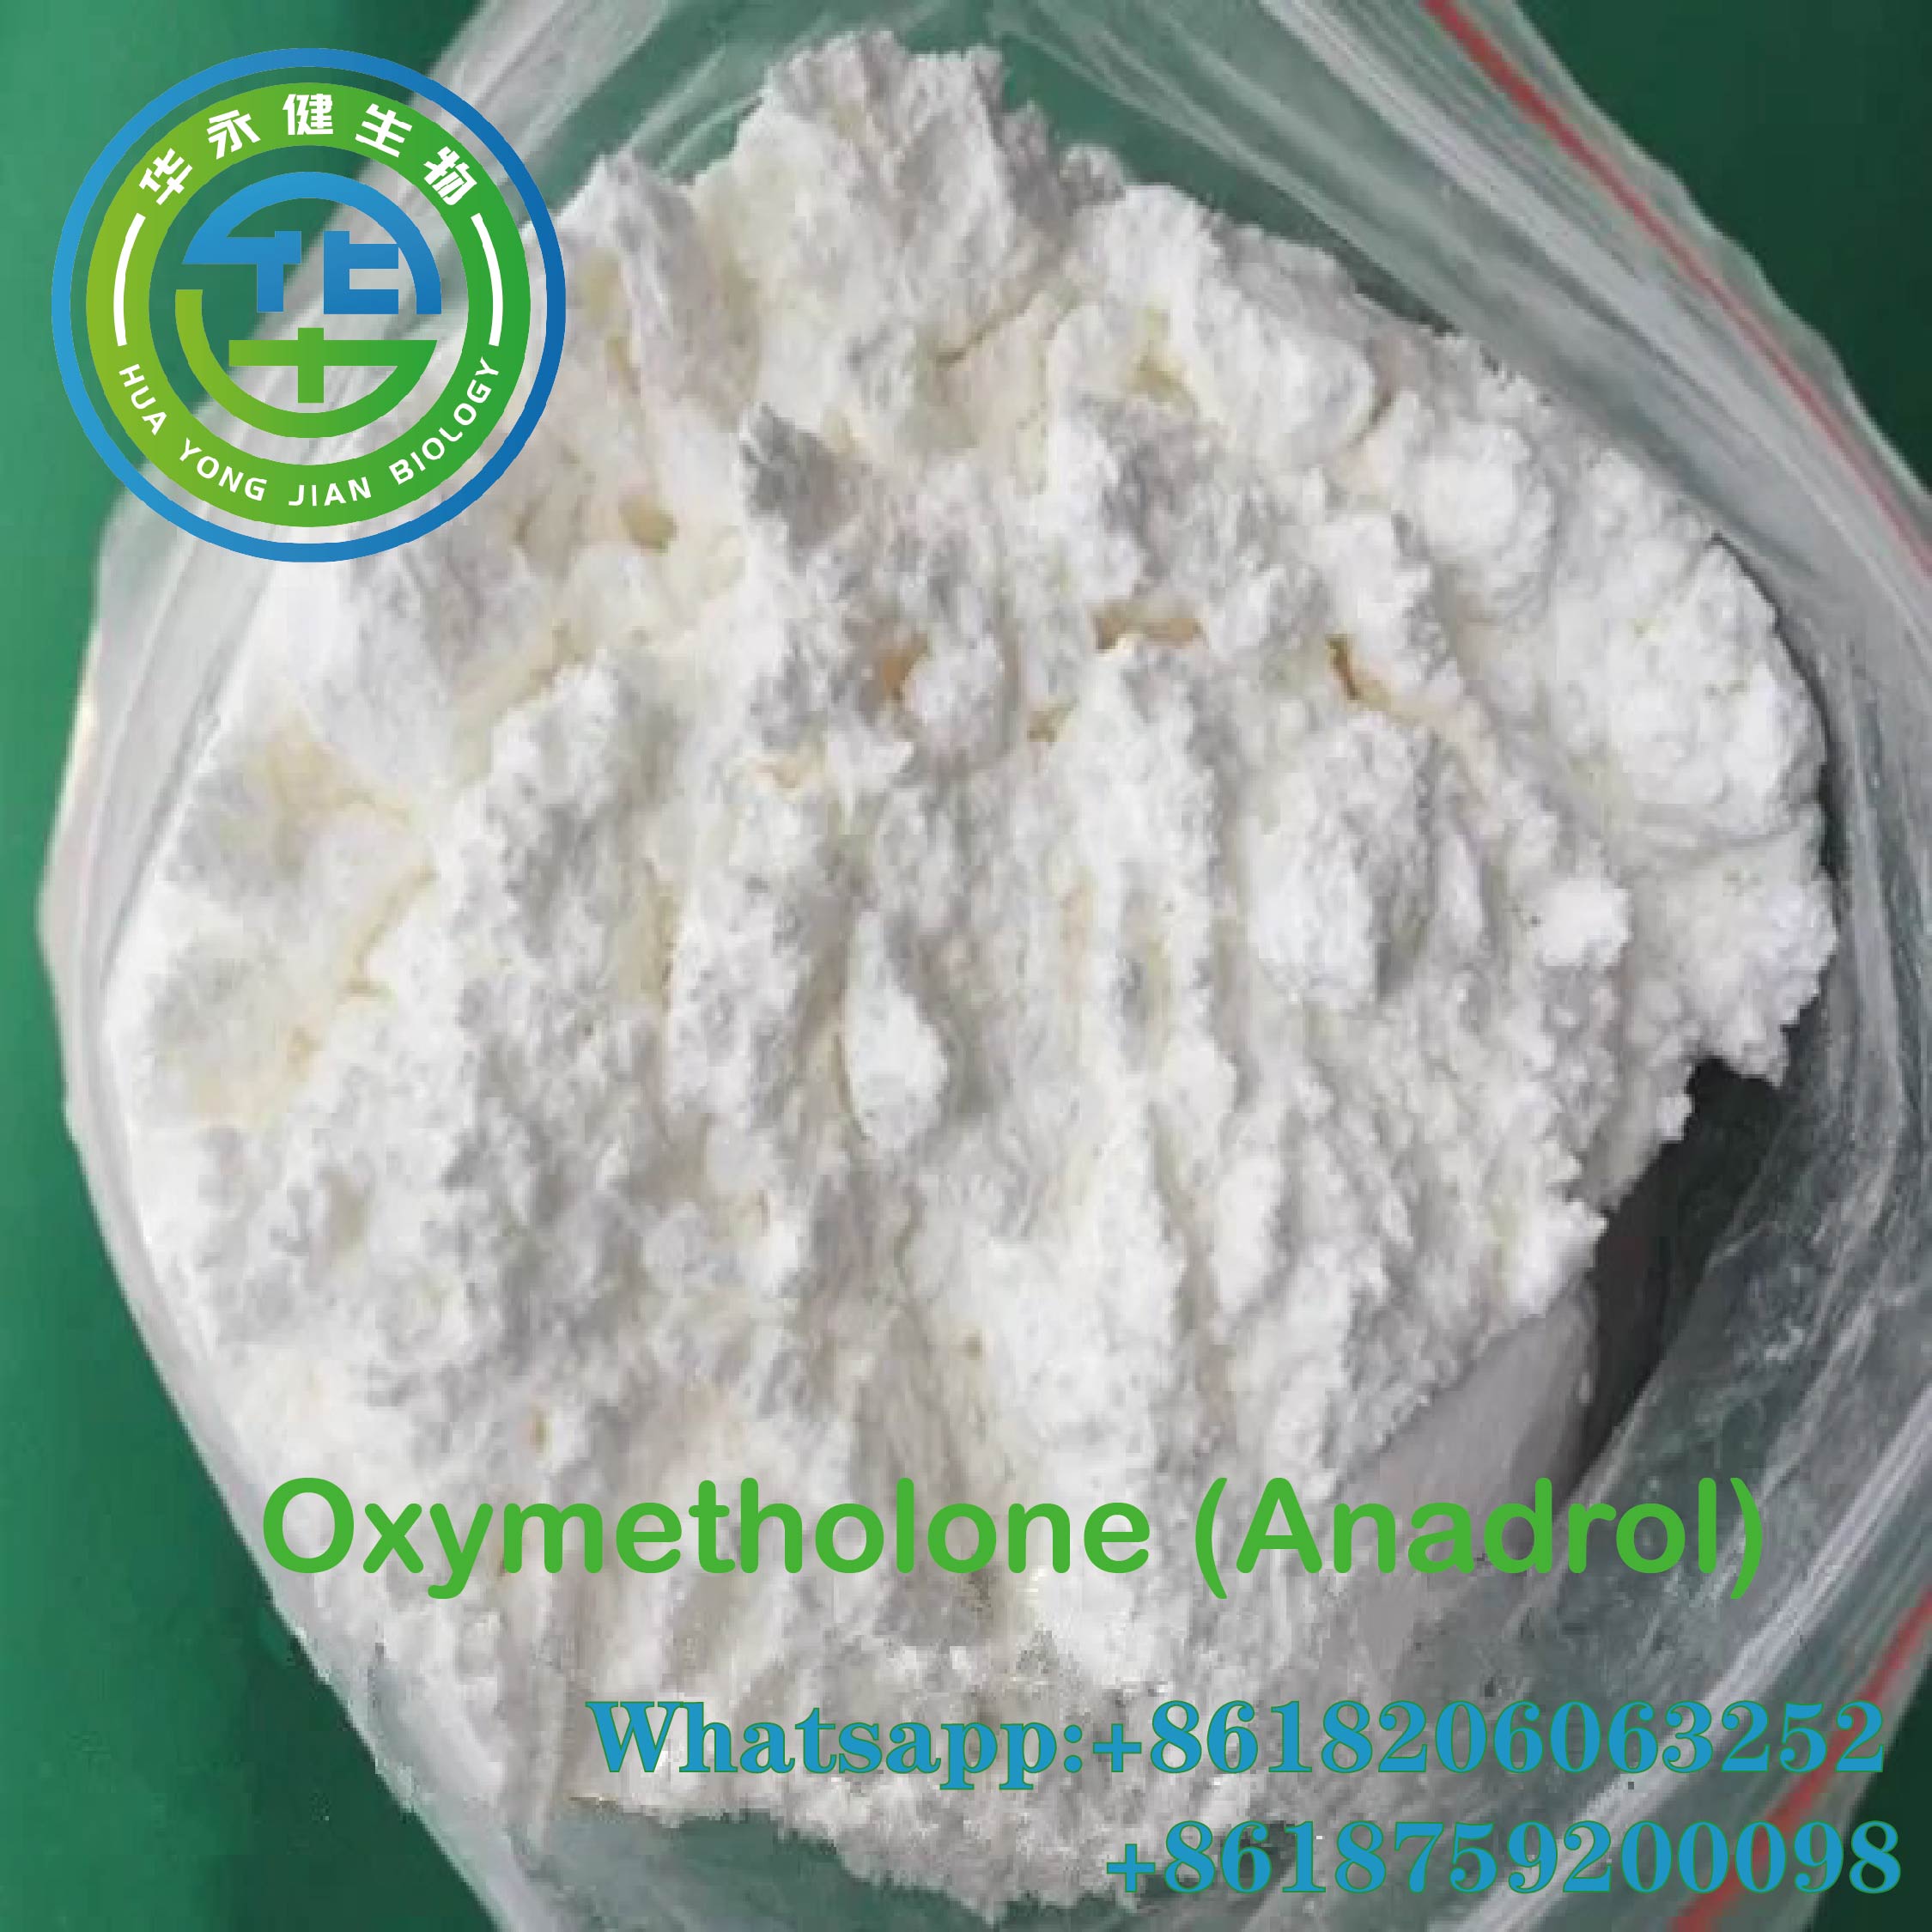 Oxymetholone Test Steroids OXY Powder USA UK ڪينيڊا ملائيشيا Domestic Shipping CasNO.434-07-1 خصوصي تصوير